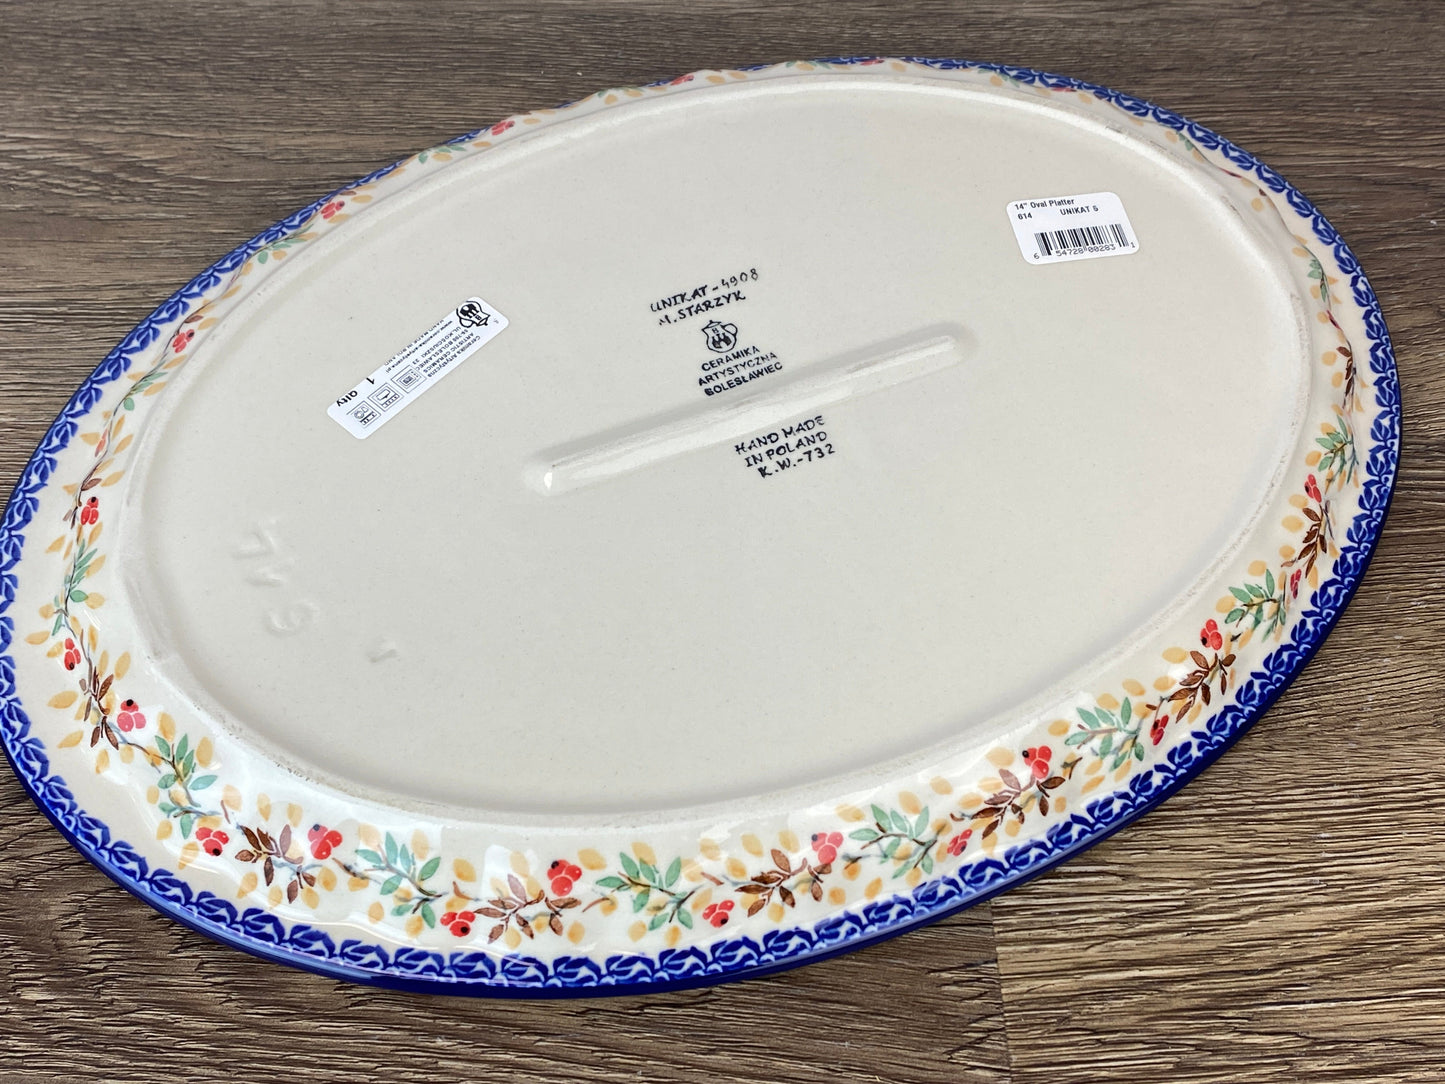 Unikat Oval Platter - Shape 614 - Pattern U4908